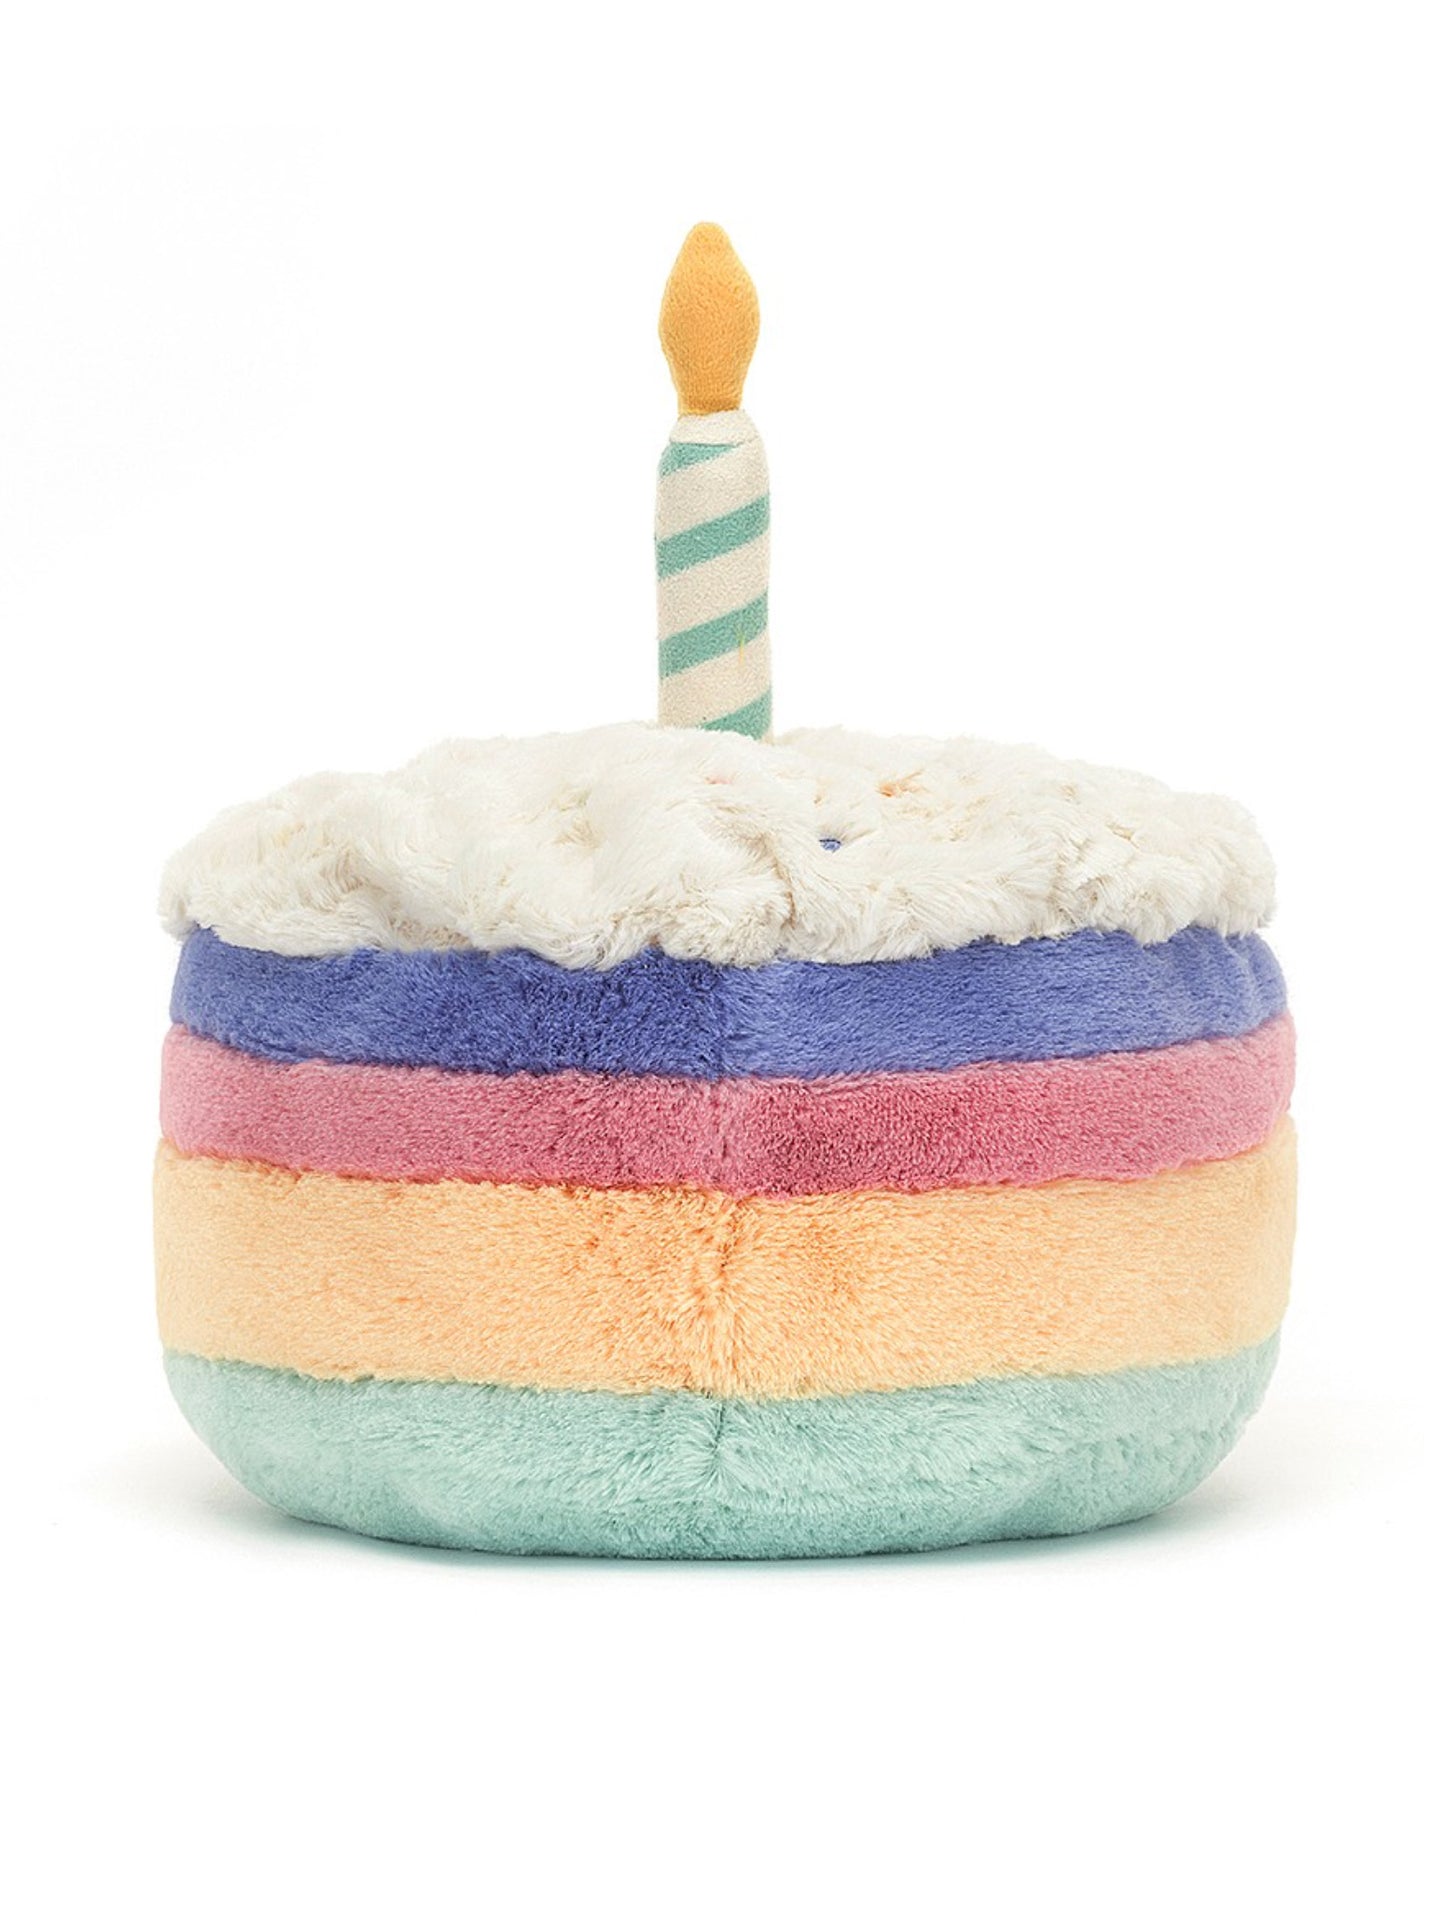 amuseable rainbow birthday cake